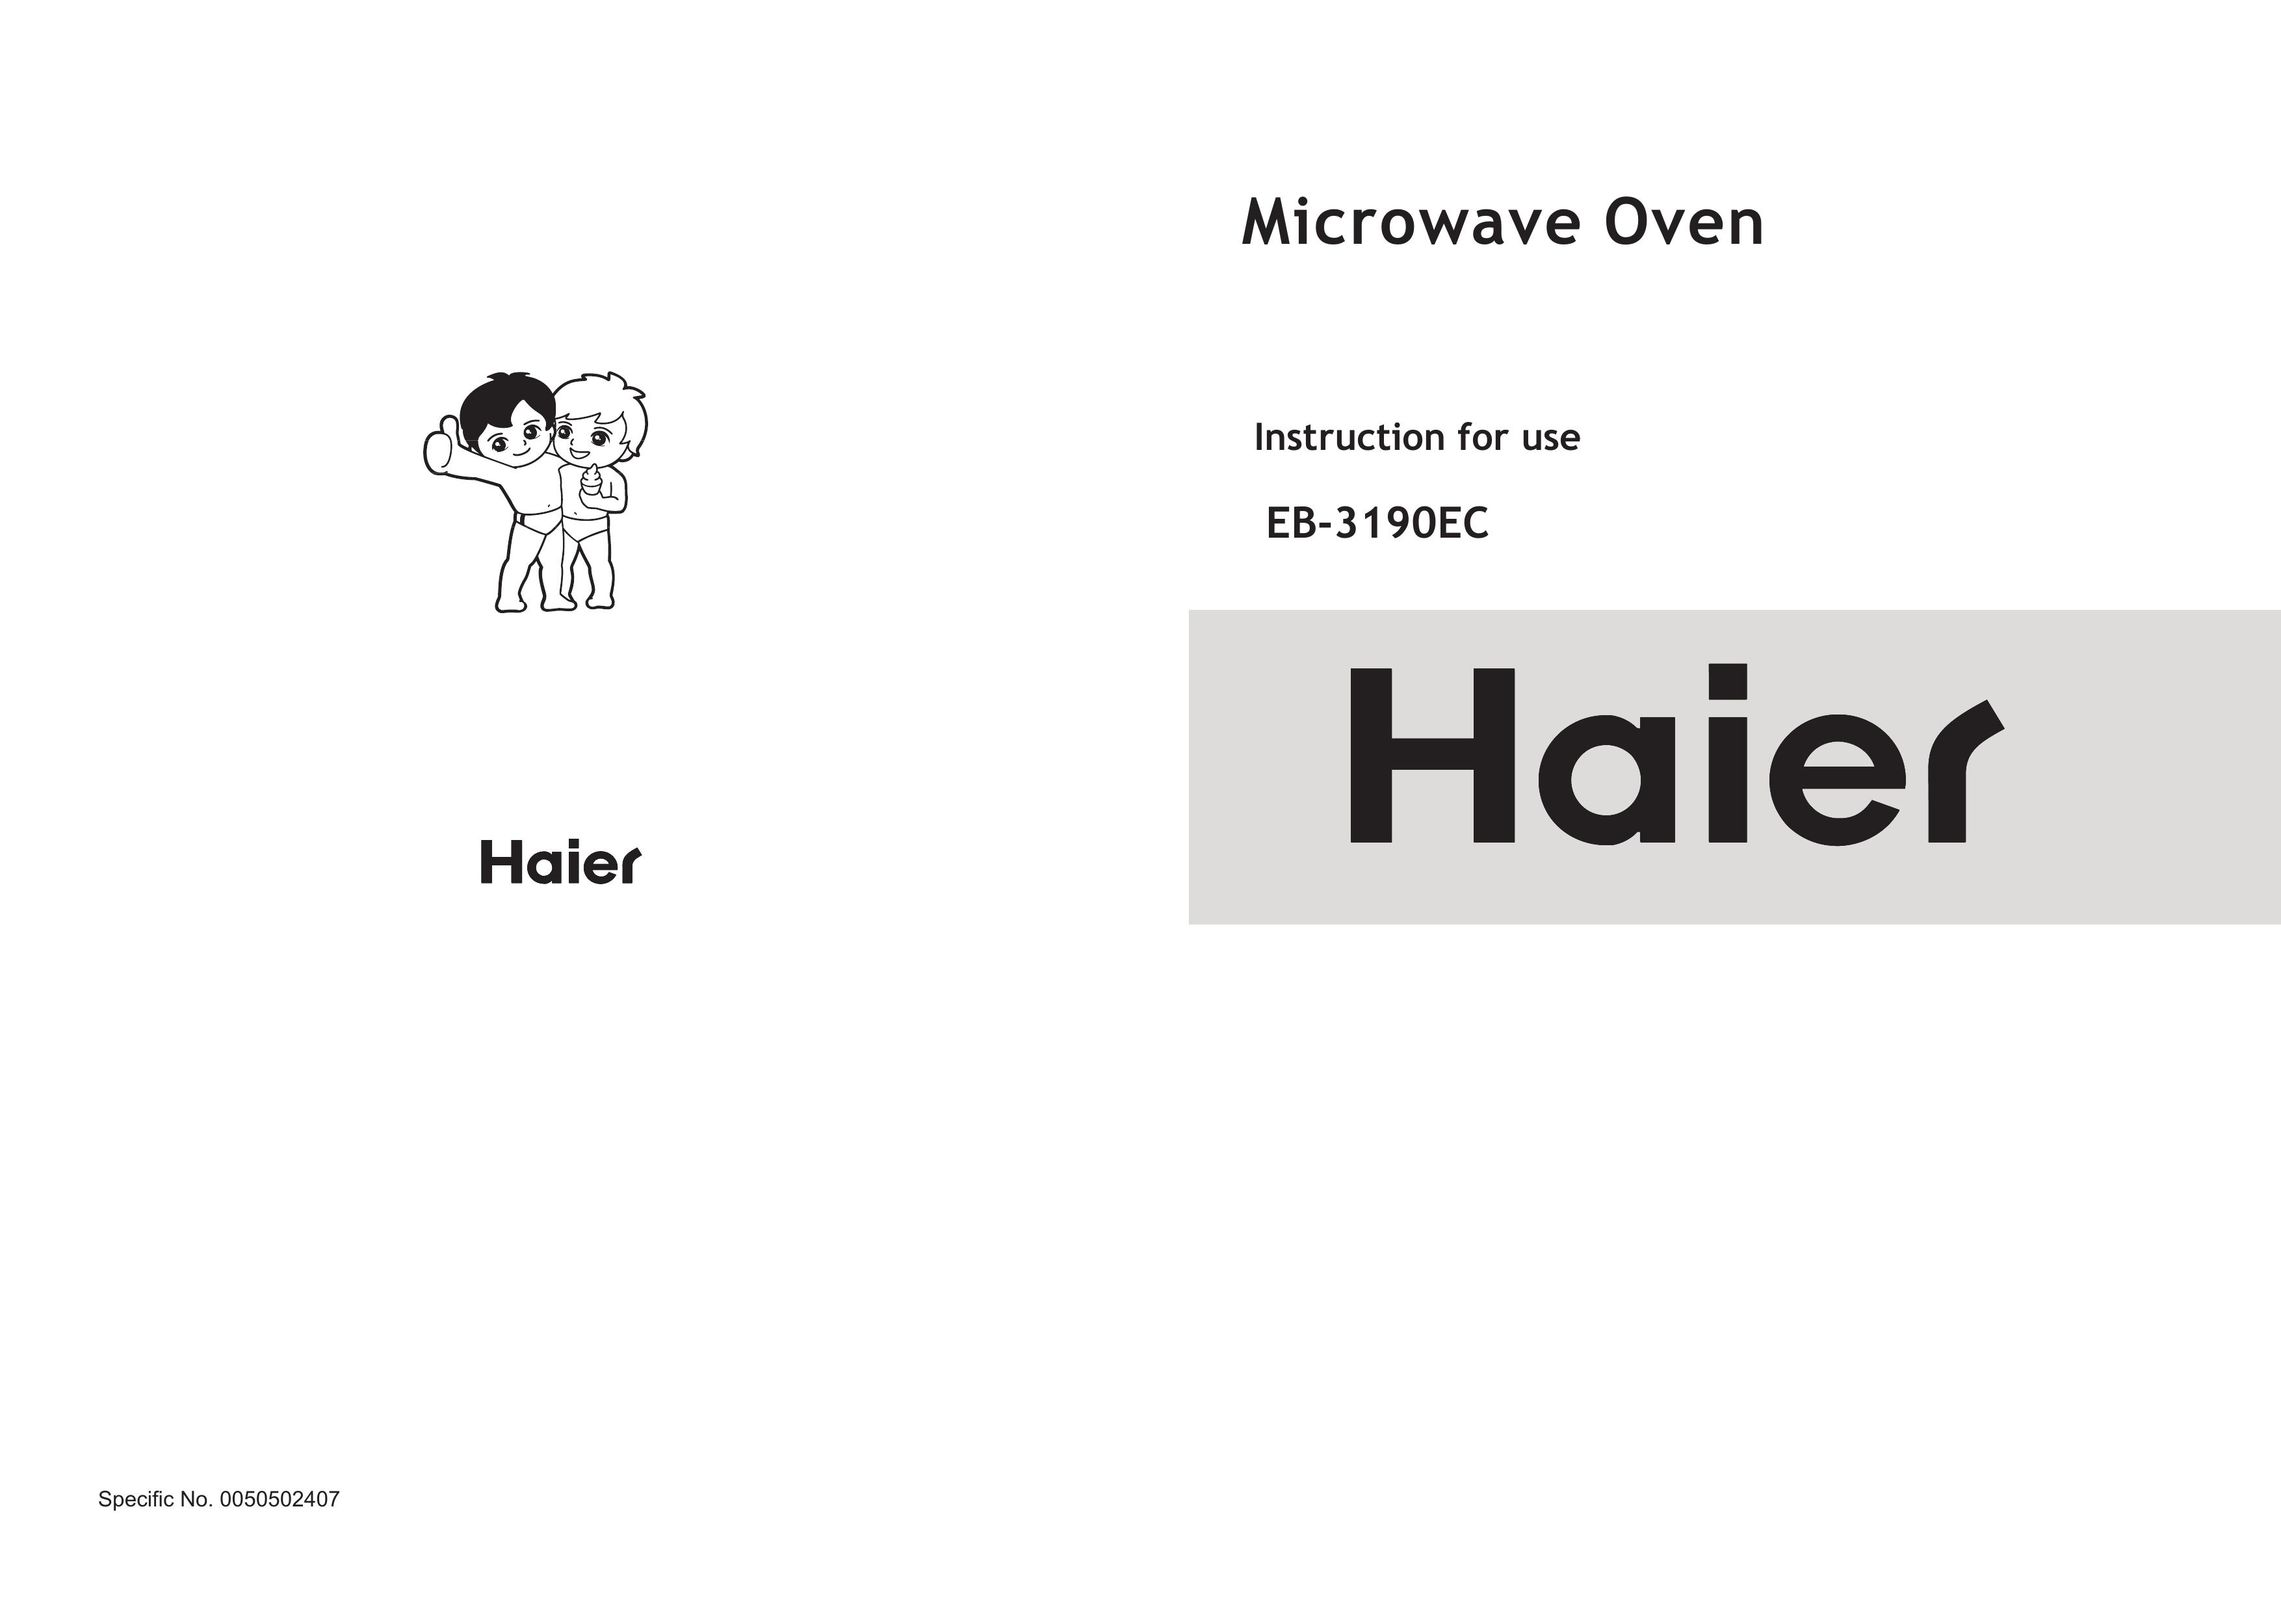 Haier EB-3190EC Microwave Oven User Manual